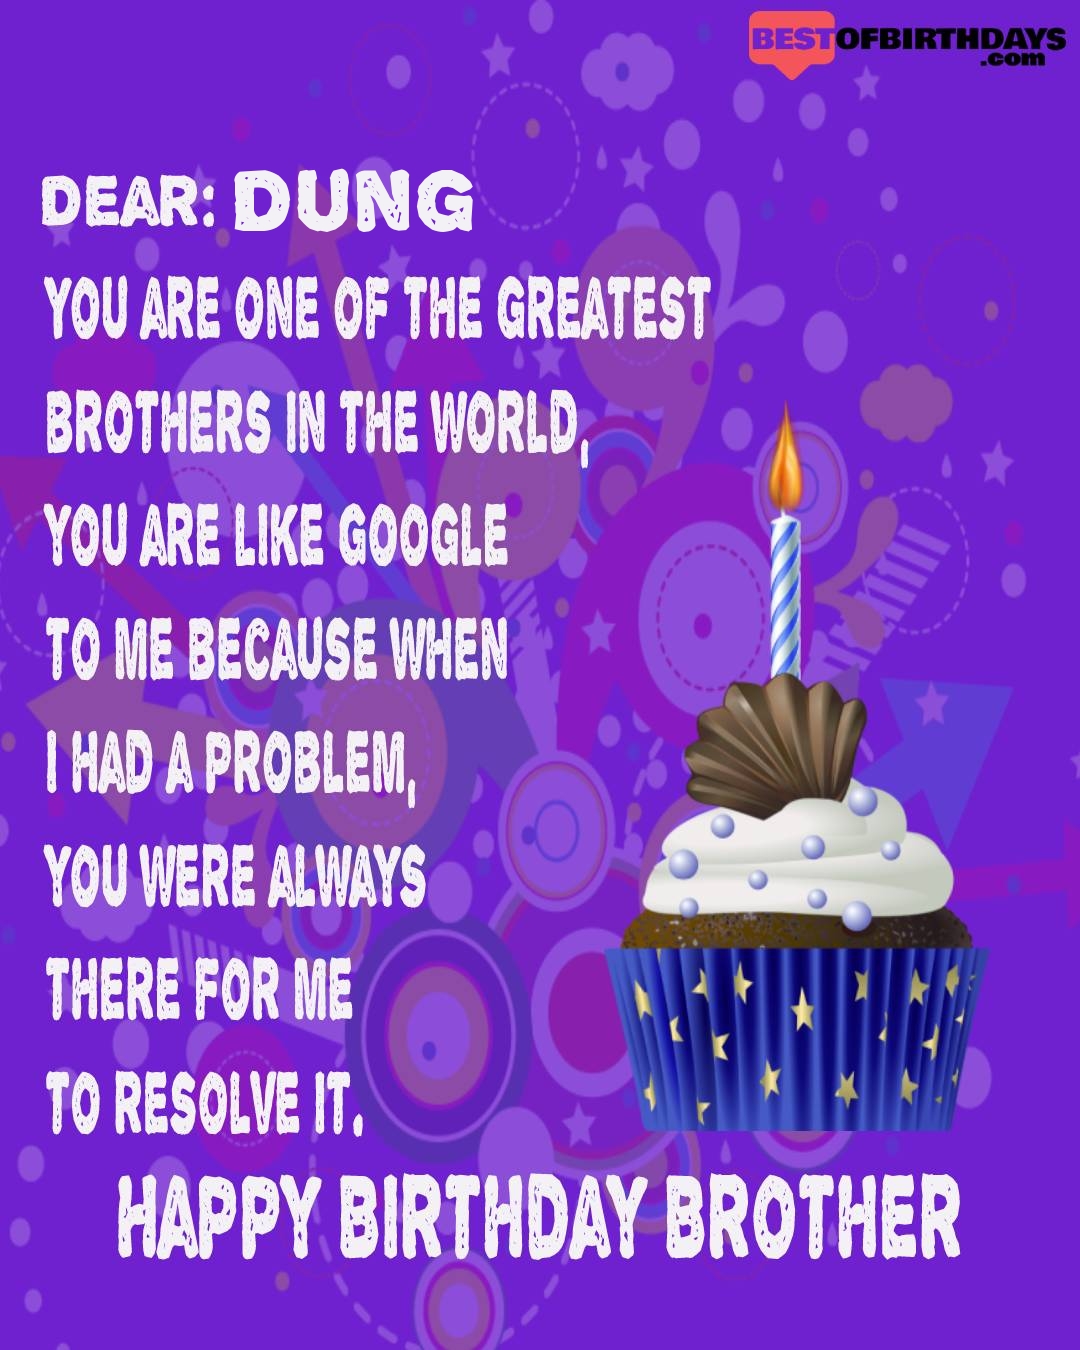 Happy birthday dung bhai brother bro